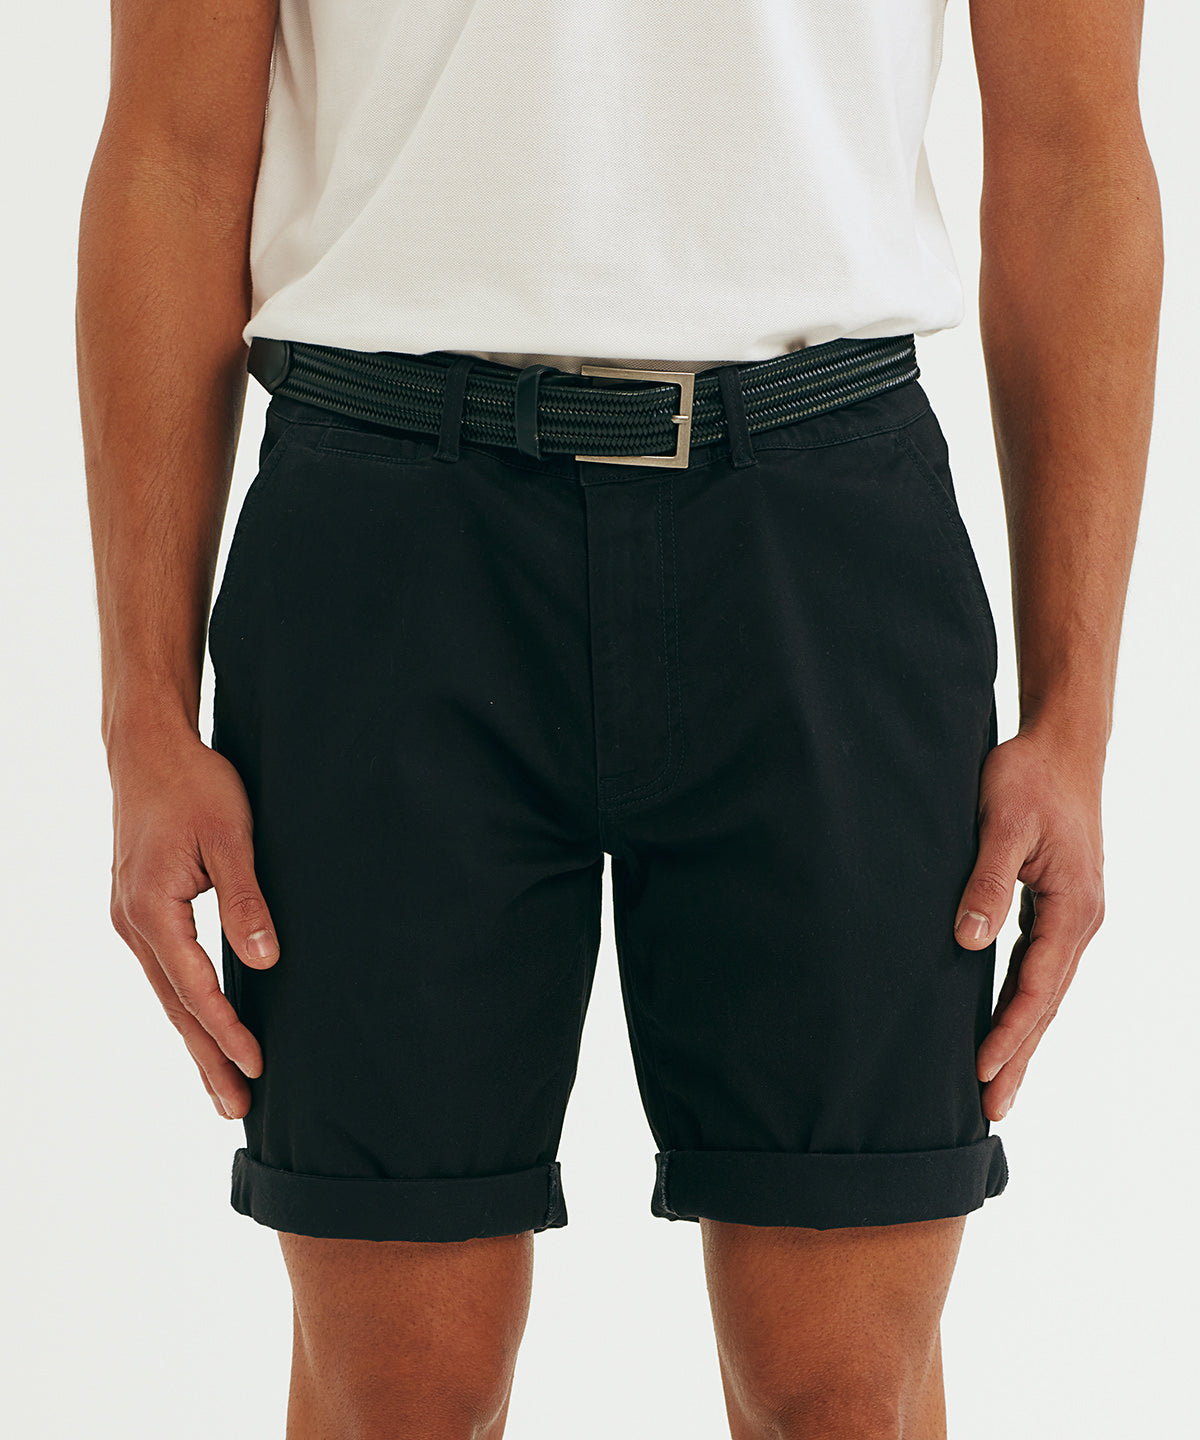 Stuttbuxur - Men’s Lightweight Chino Shorts